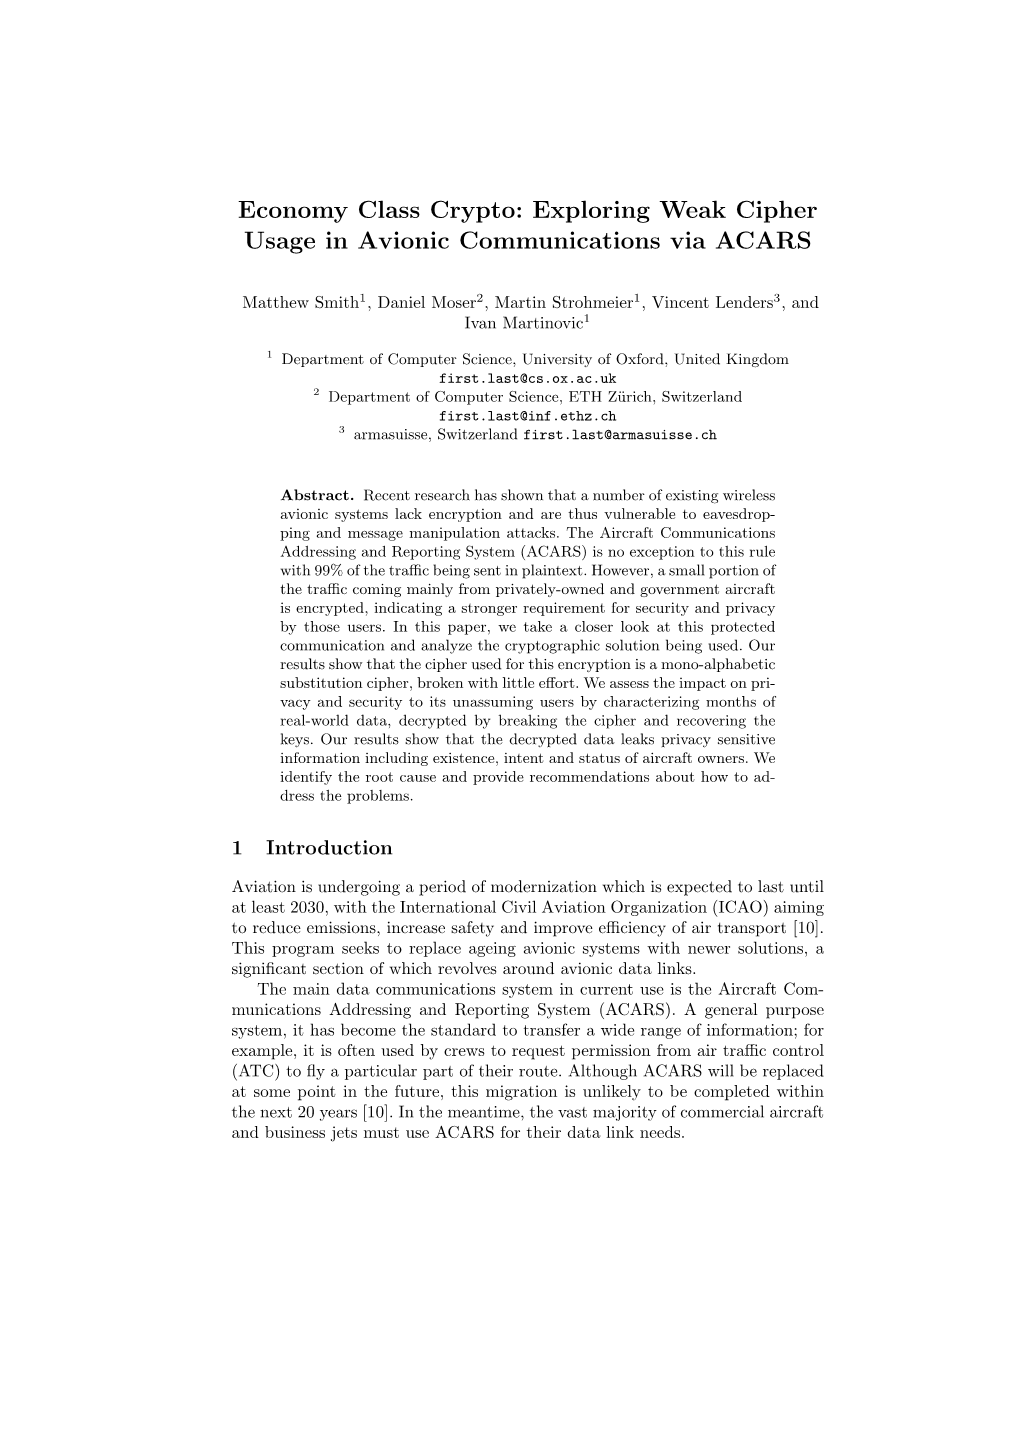 Exploring Weak Cipher Usage in Avionic Communications Via ACARS